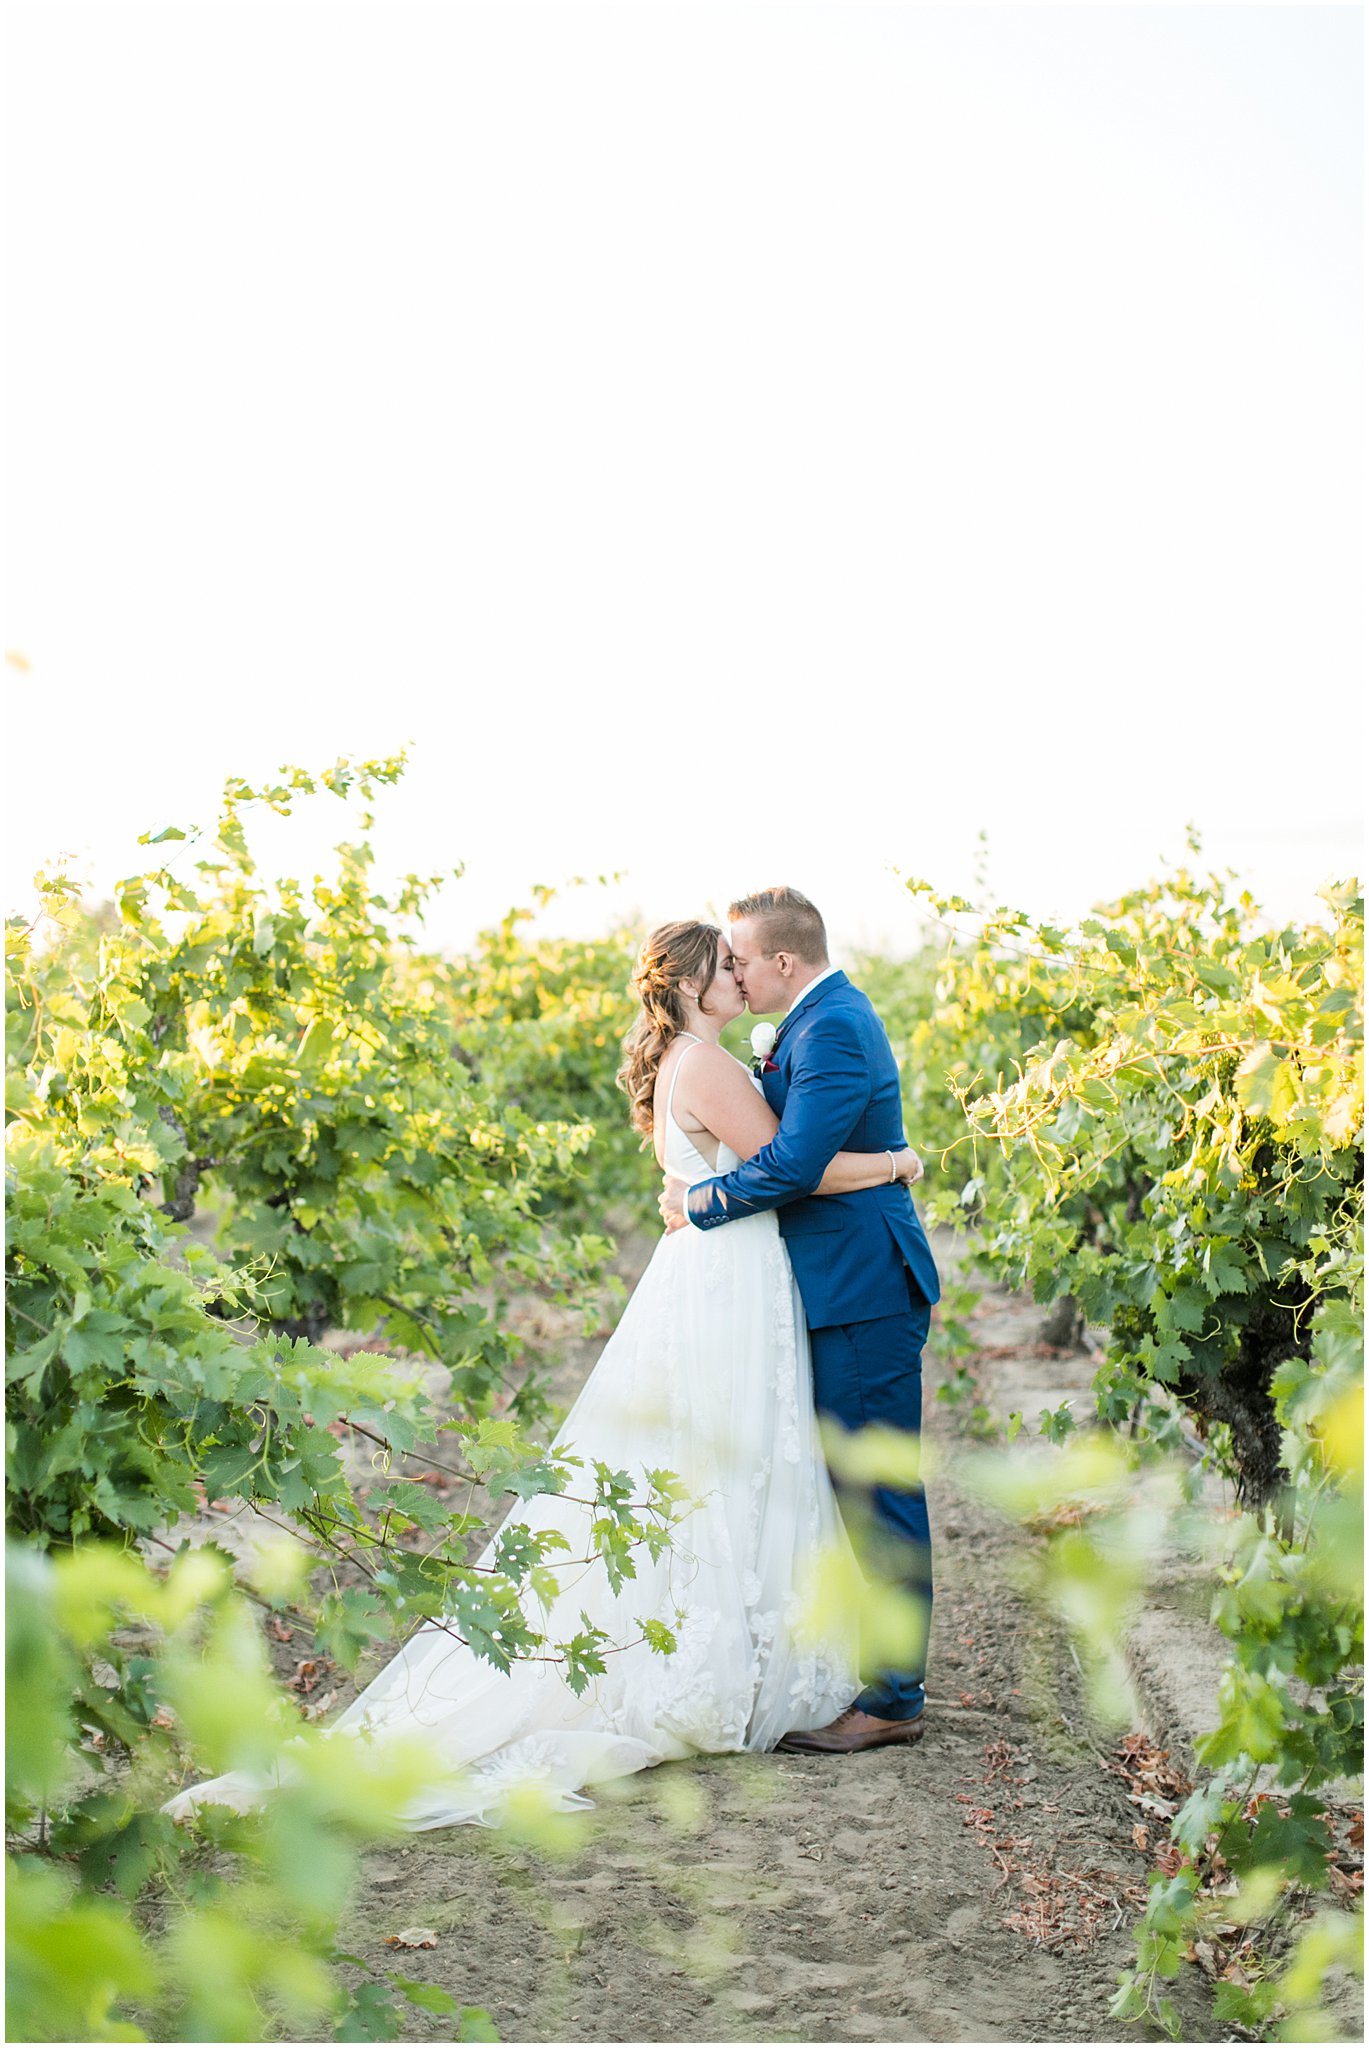 Victor Vineyards Lodi California Wedding - Northern California Wedding Photographer - Vineyard Wedding - Angela Sue Photography_0084.jpg